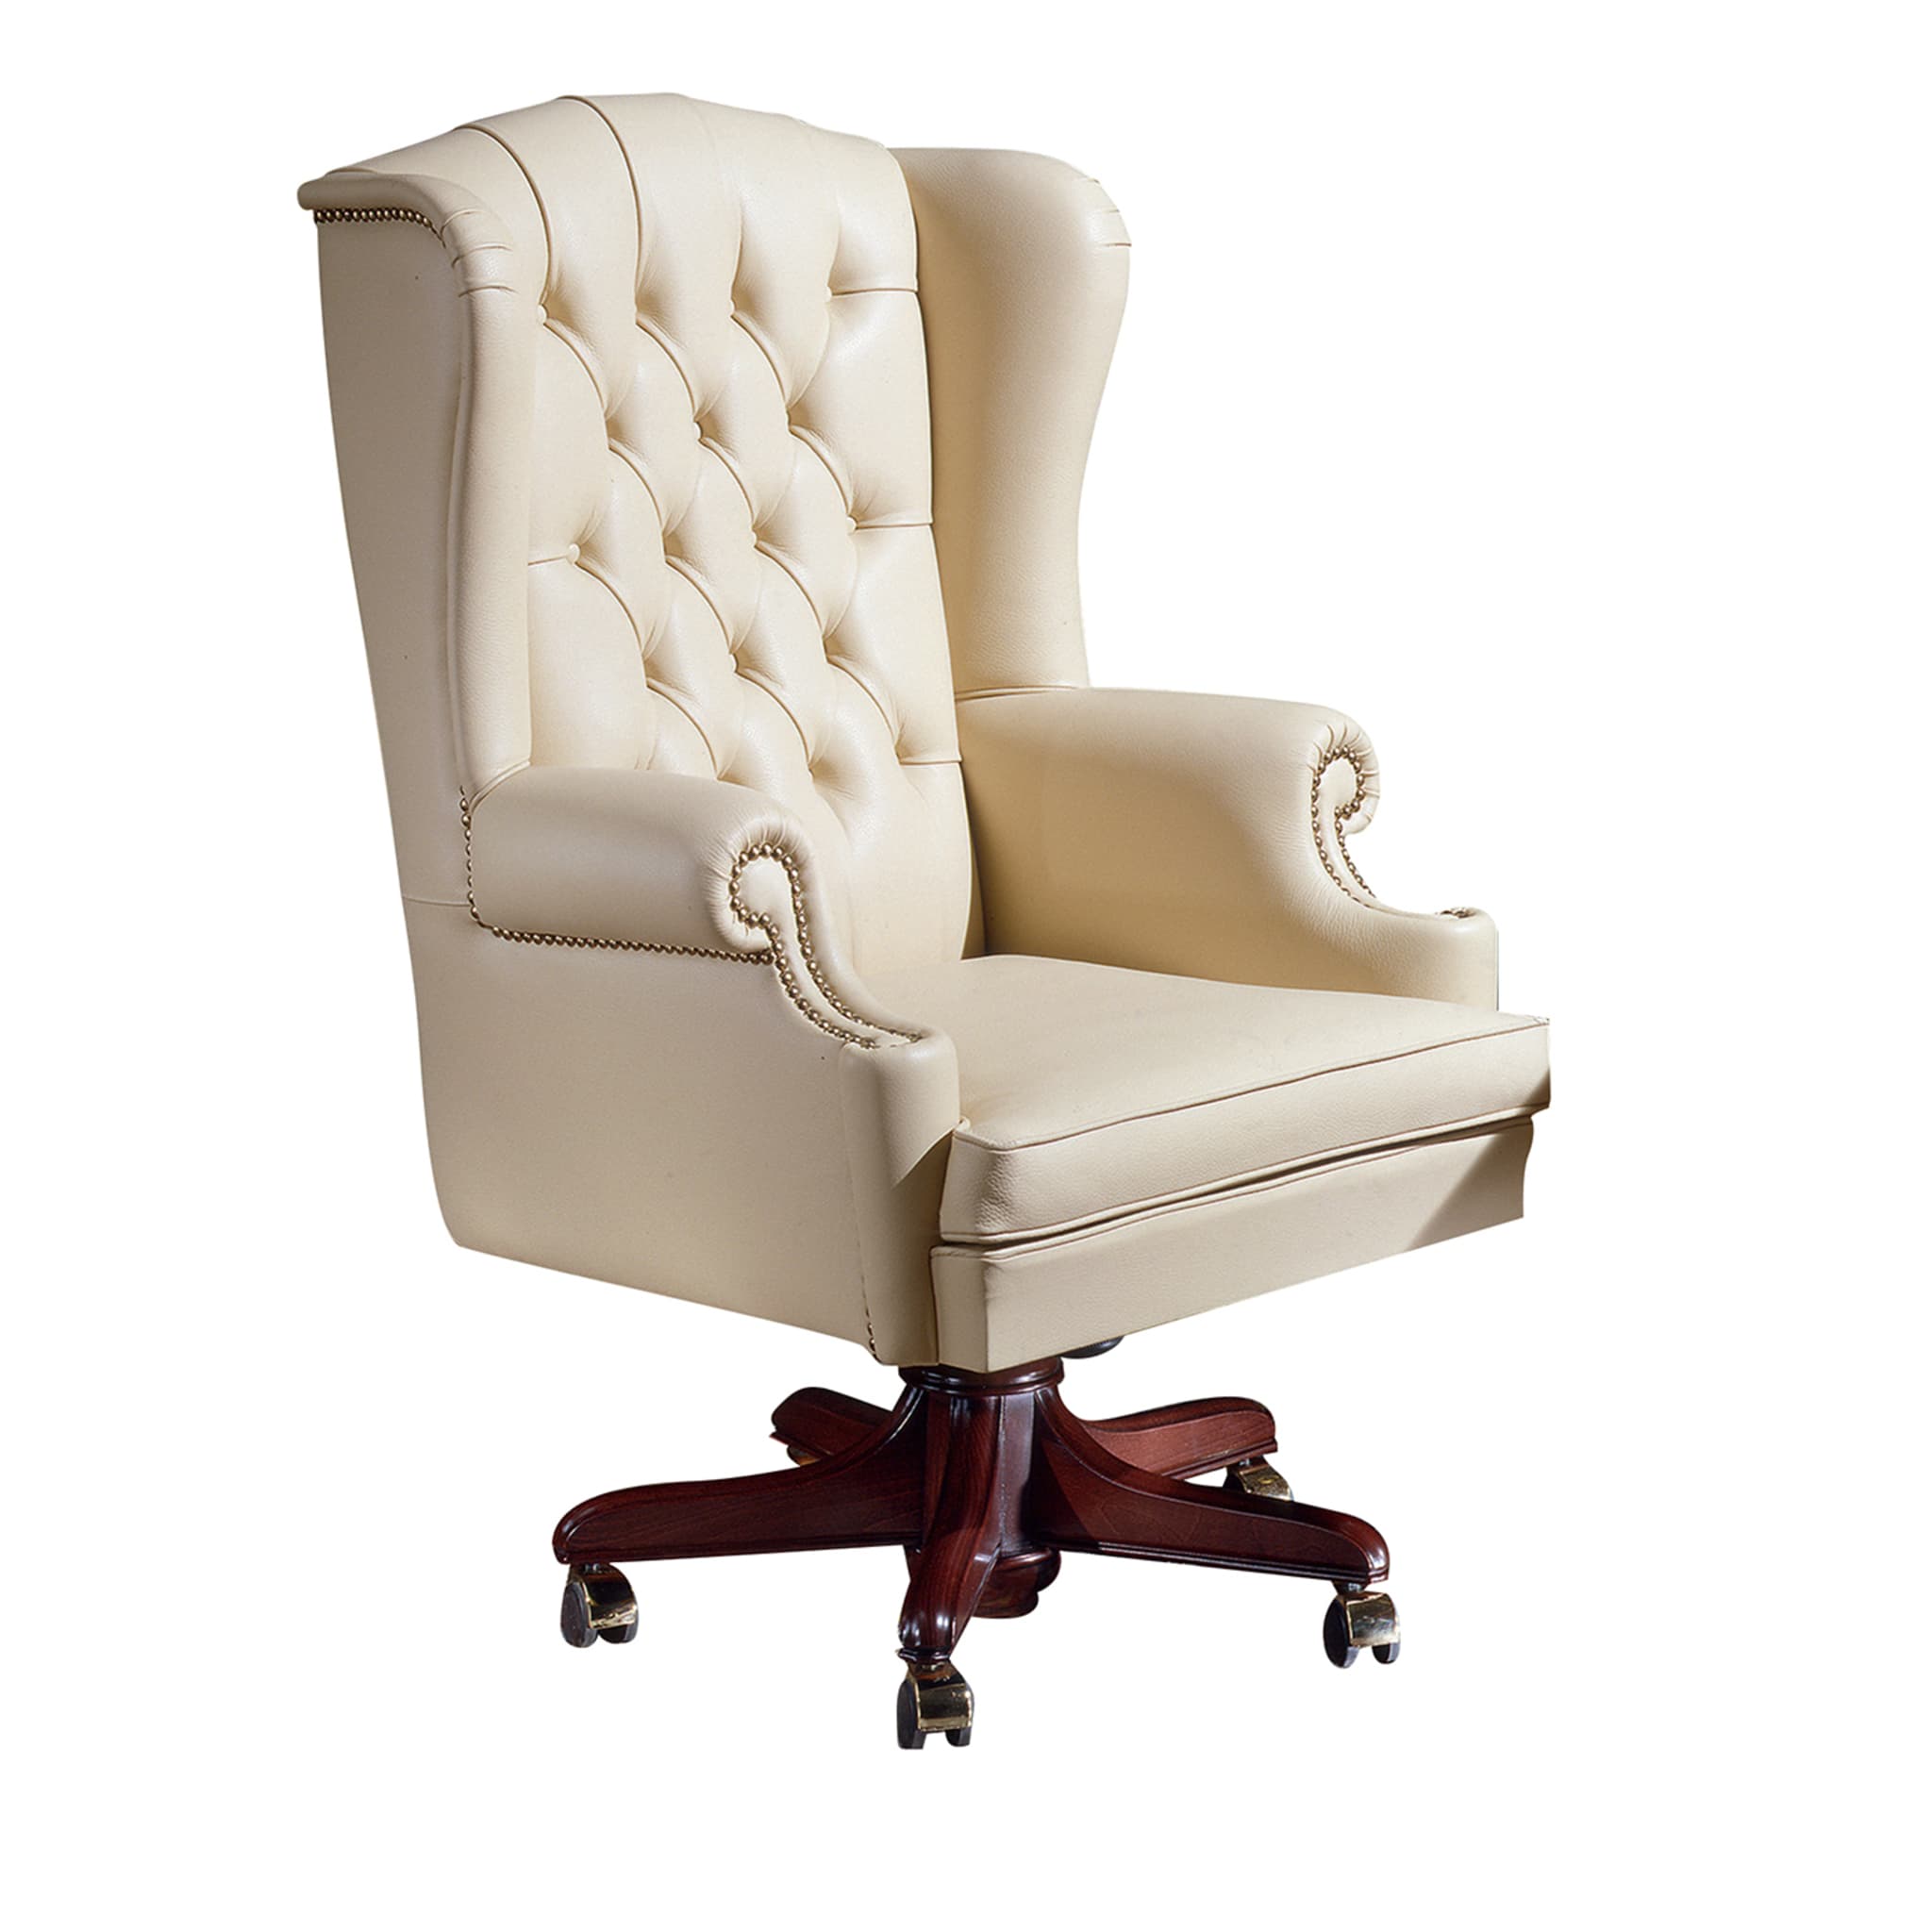 Cream Leather Armchair - Main view